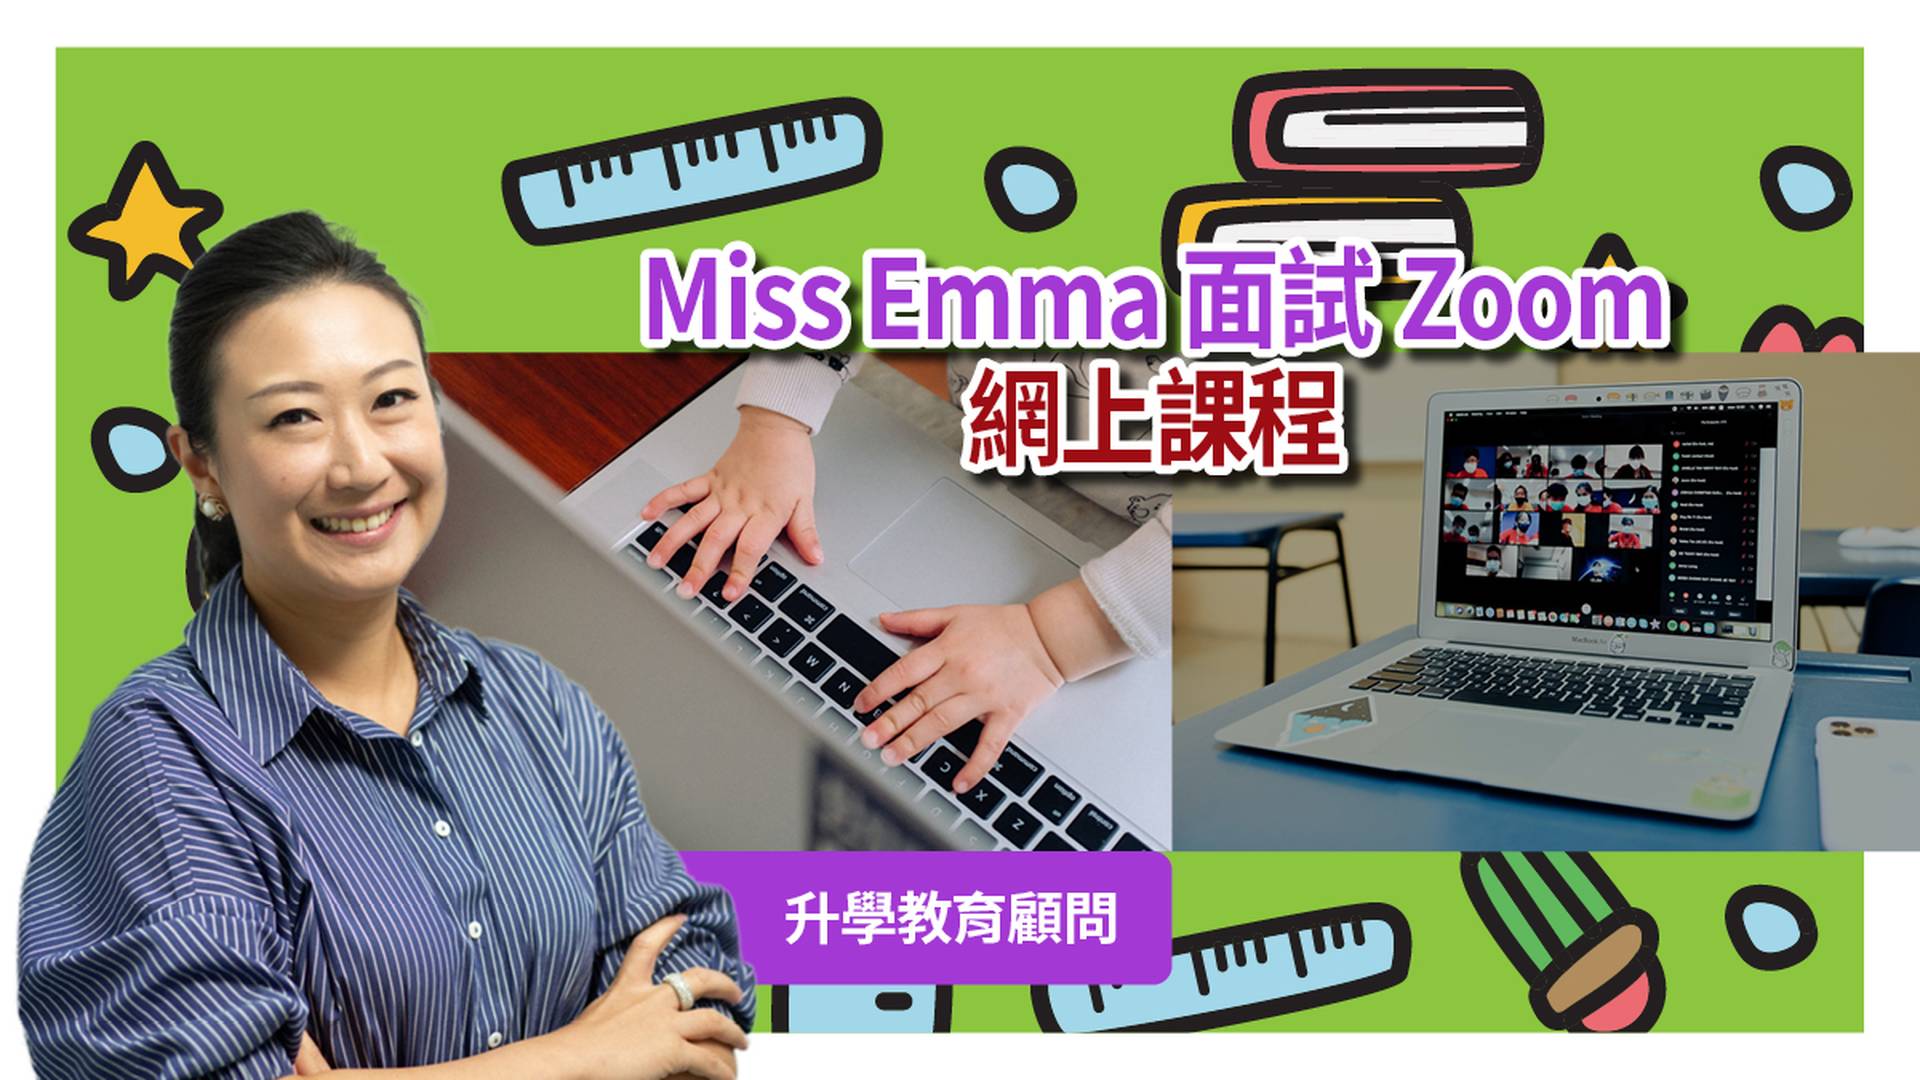 Miss Emma 面試Zoom網上課程